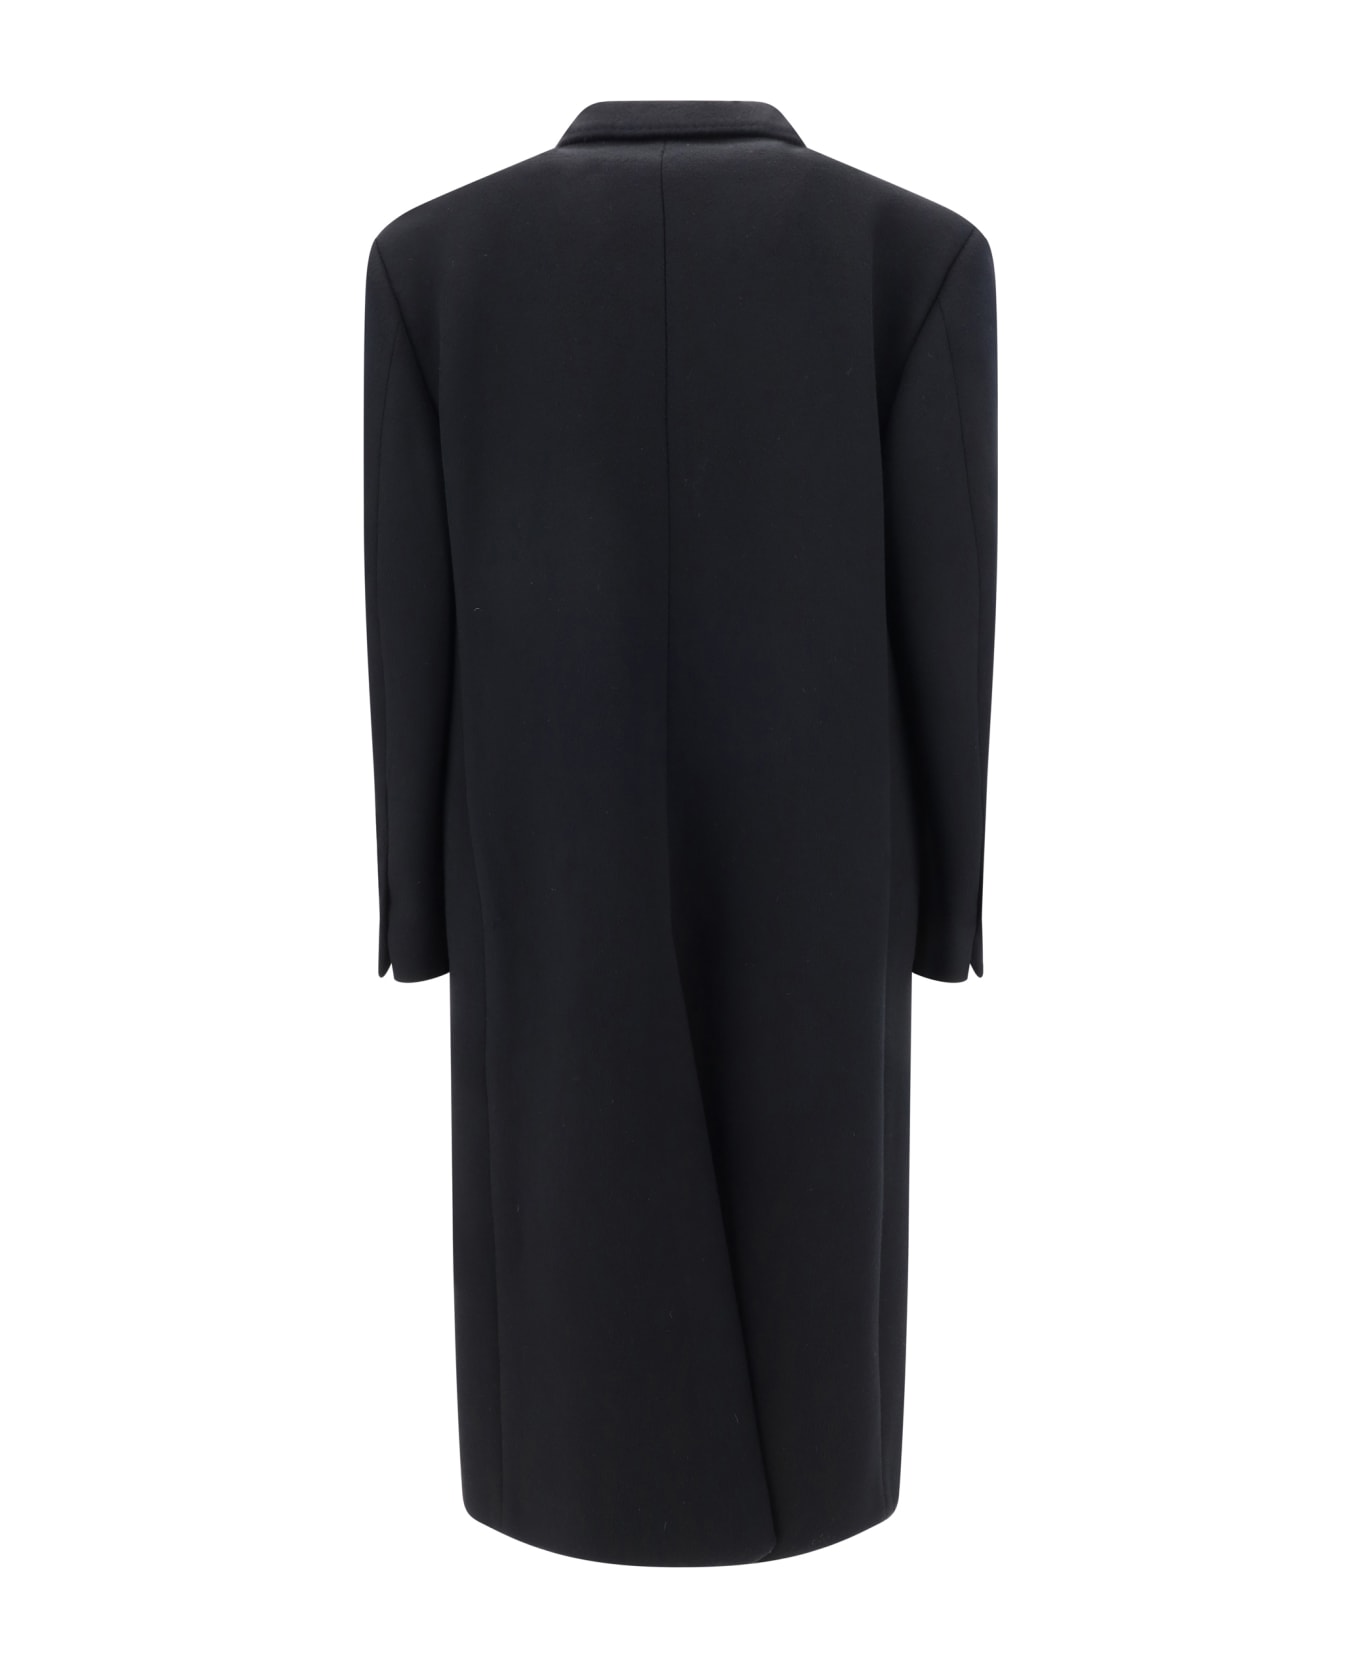 Balenciaga Oversize Coat - Black